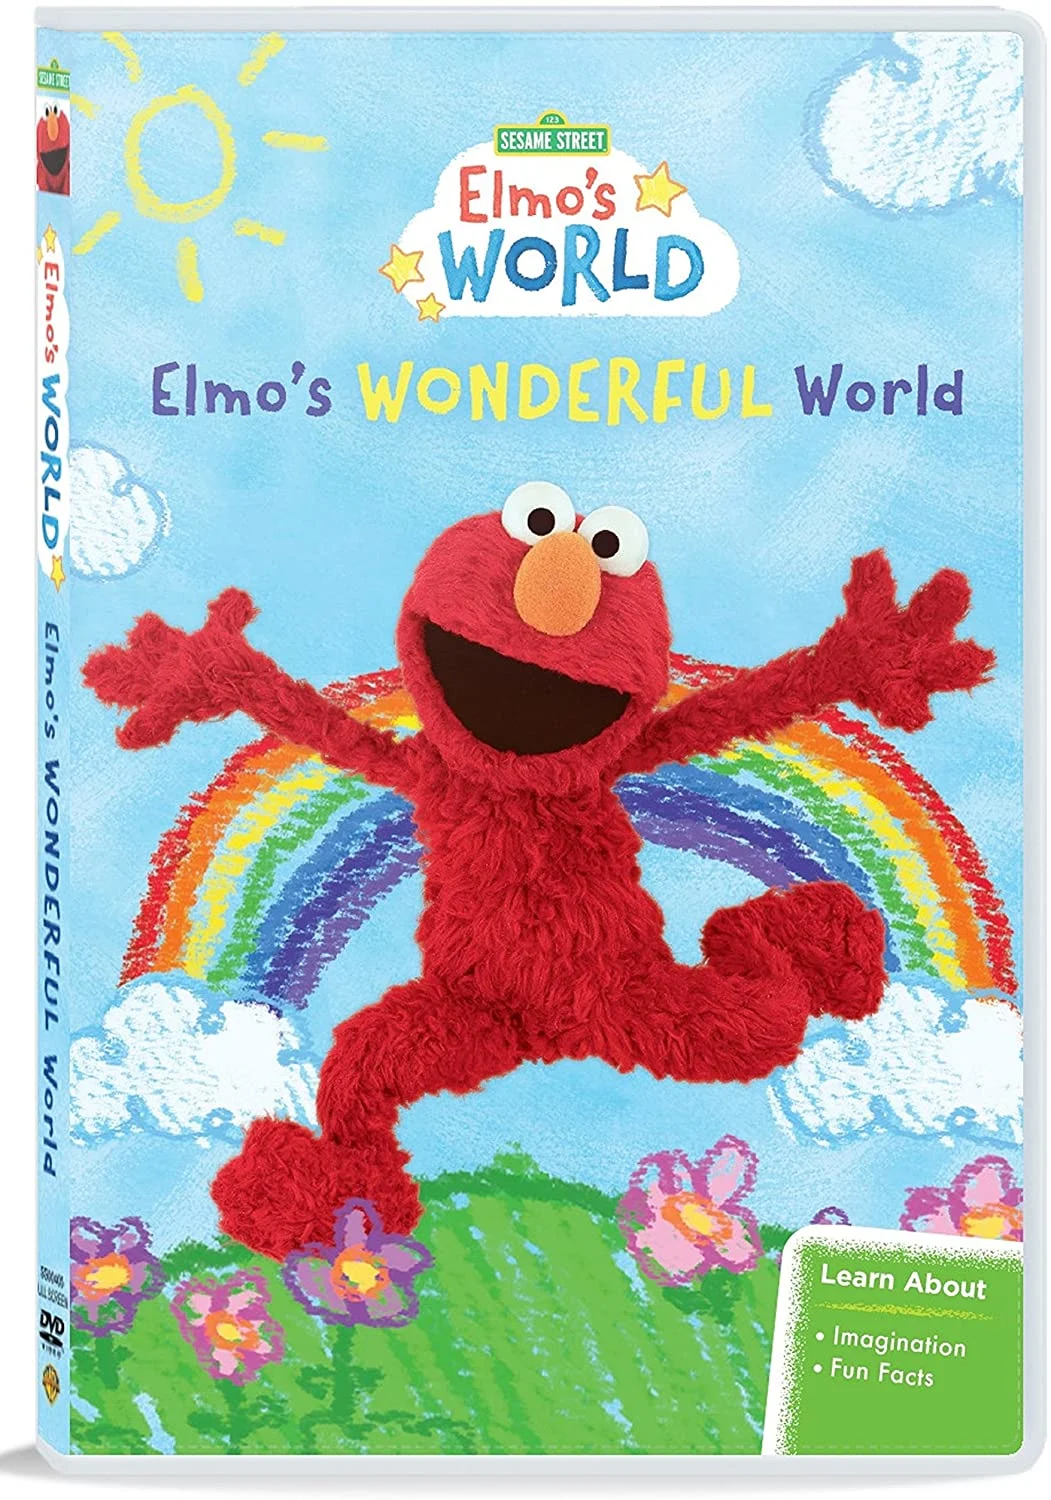 Elmo’s World: Elmo’s Wonderful World (DVD) on MovieShack